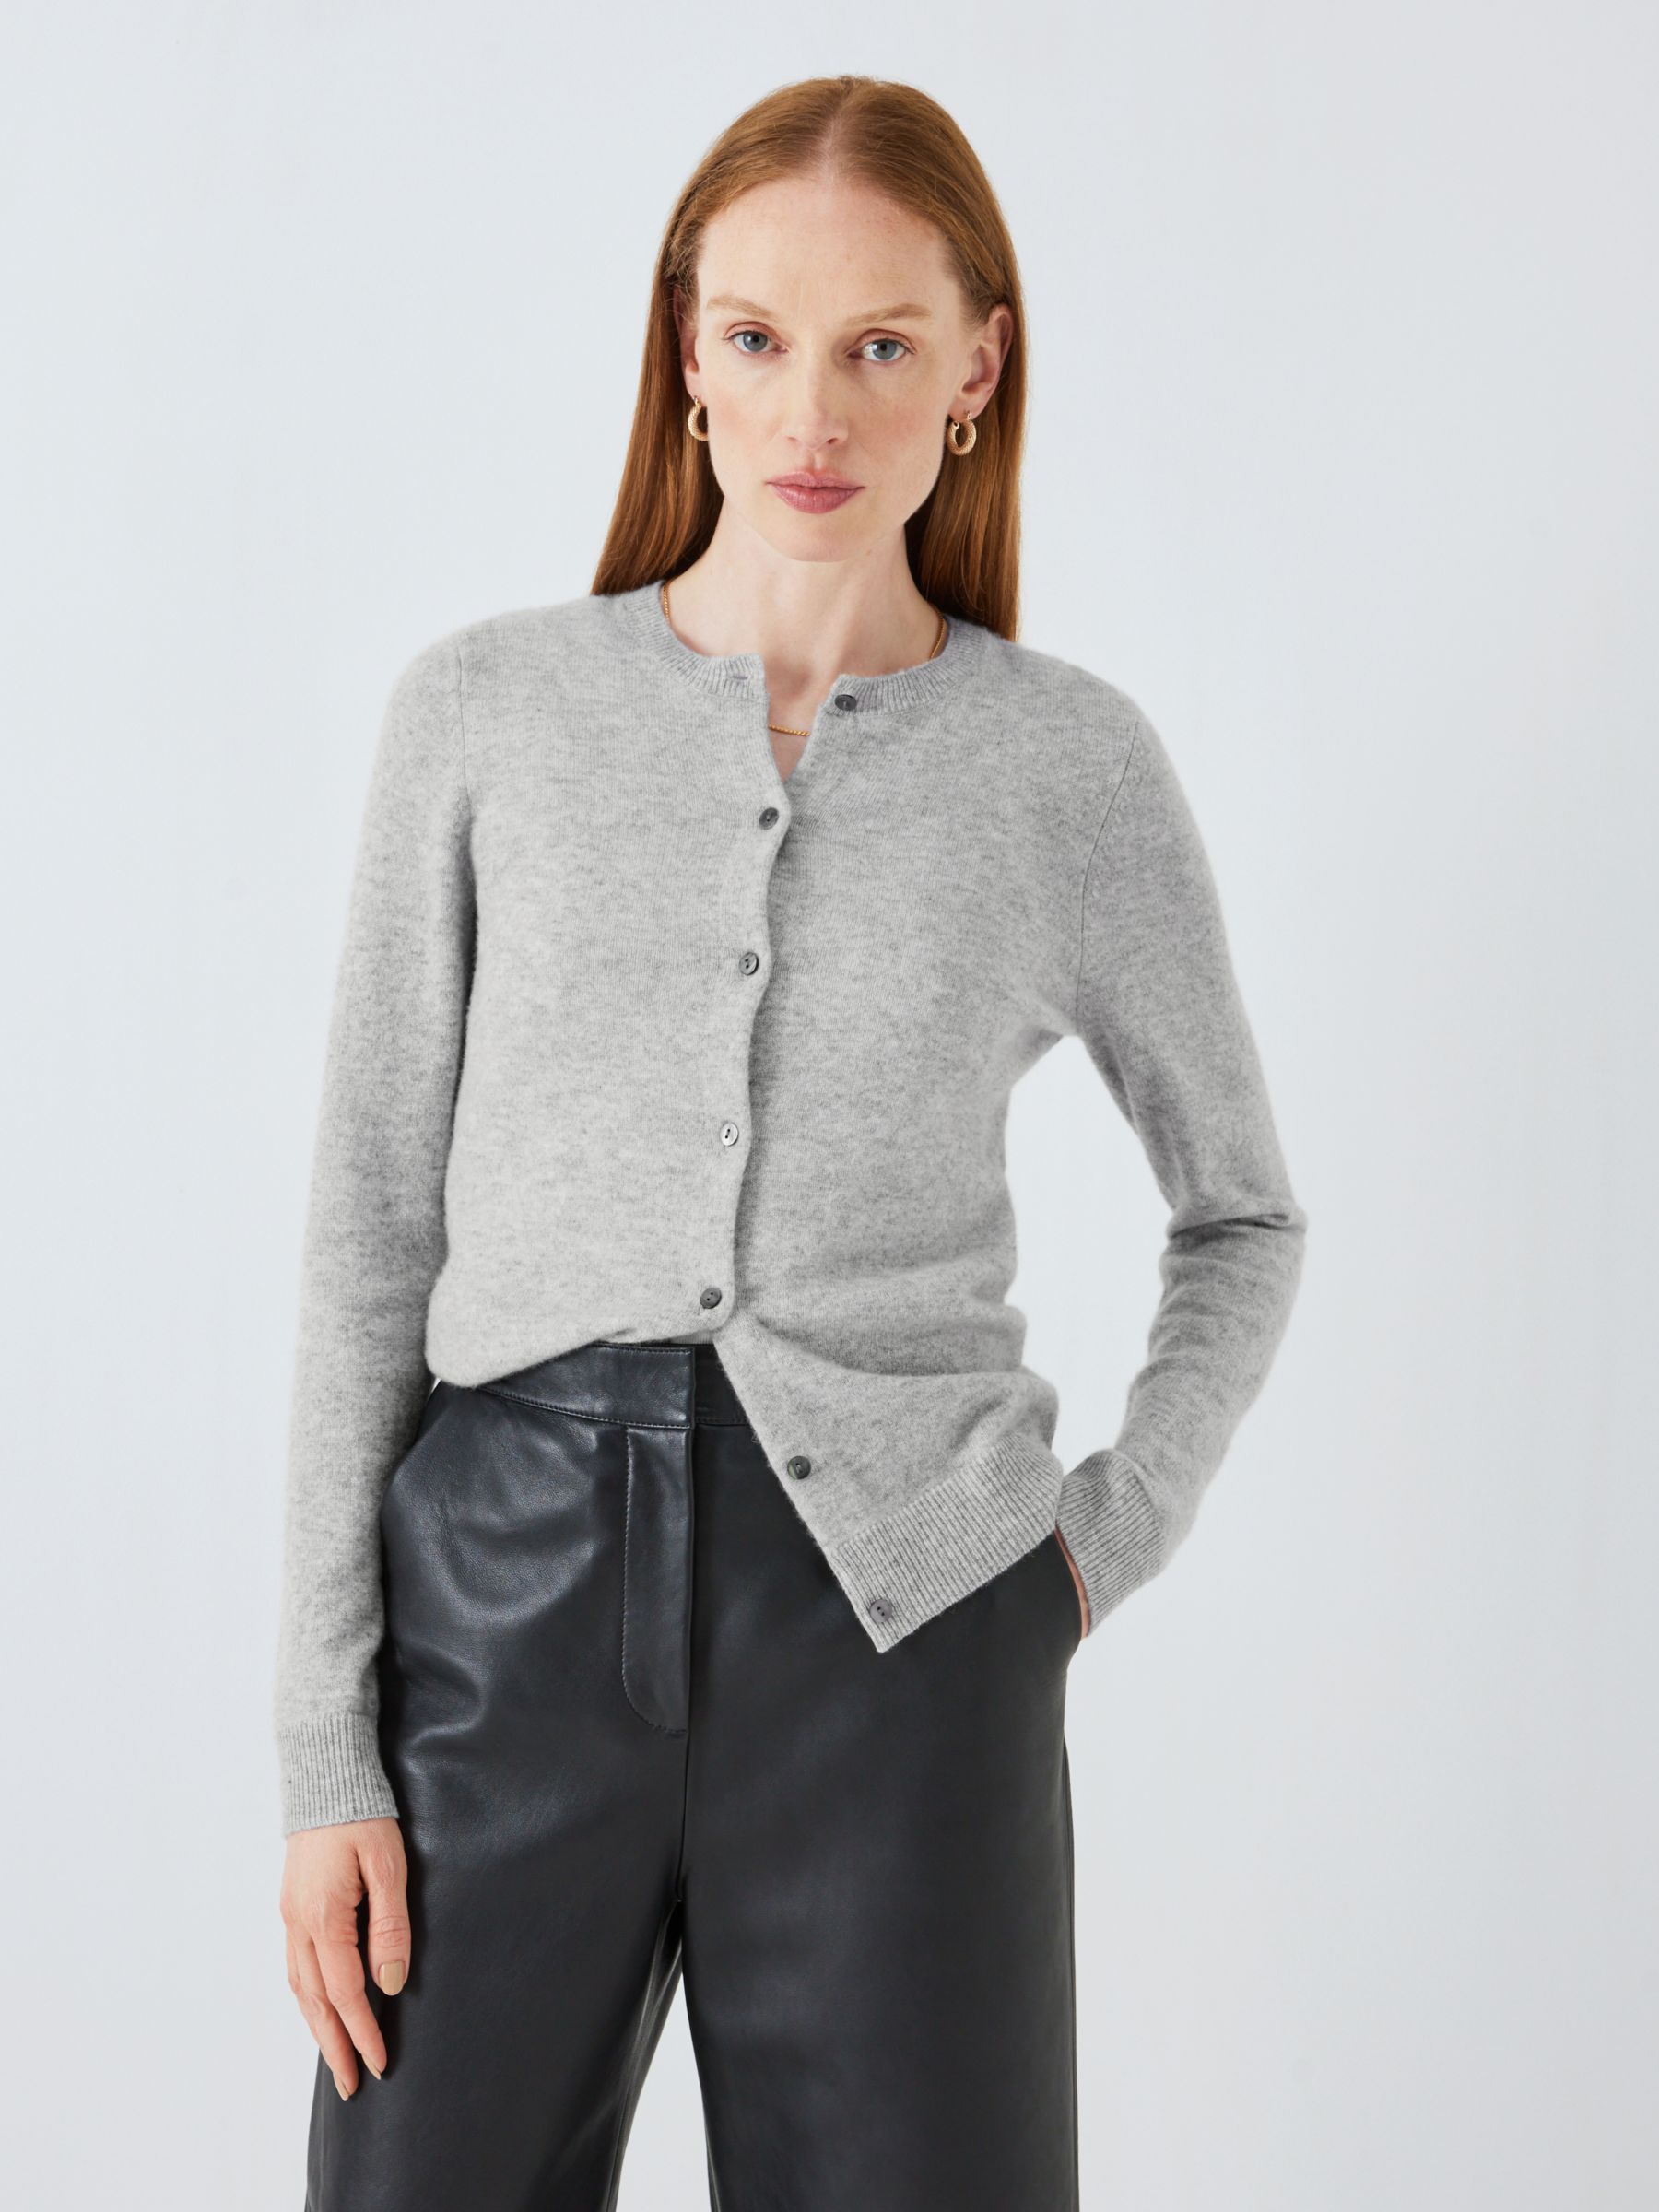 Grey Open-Front Cardigan - Grey Shrug Sweater - Cropped Cardigan - Lulus